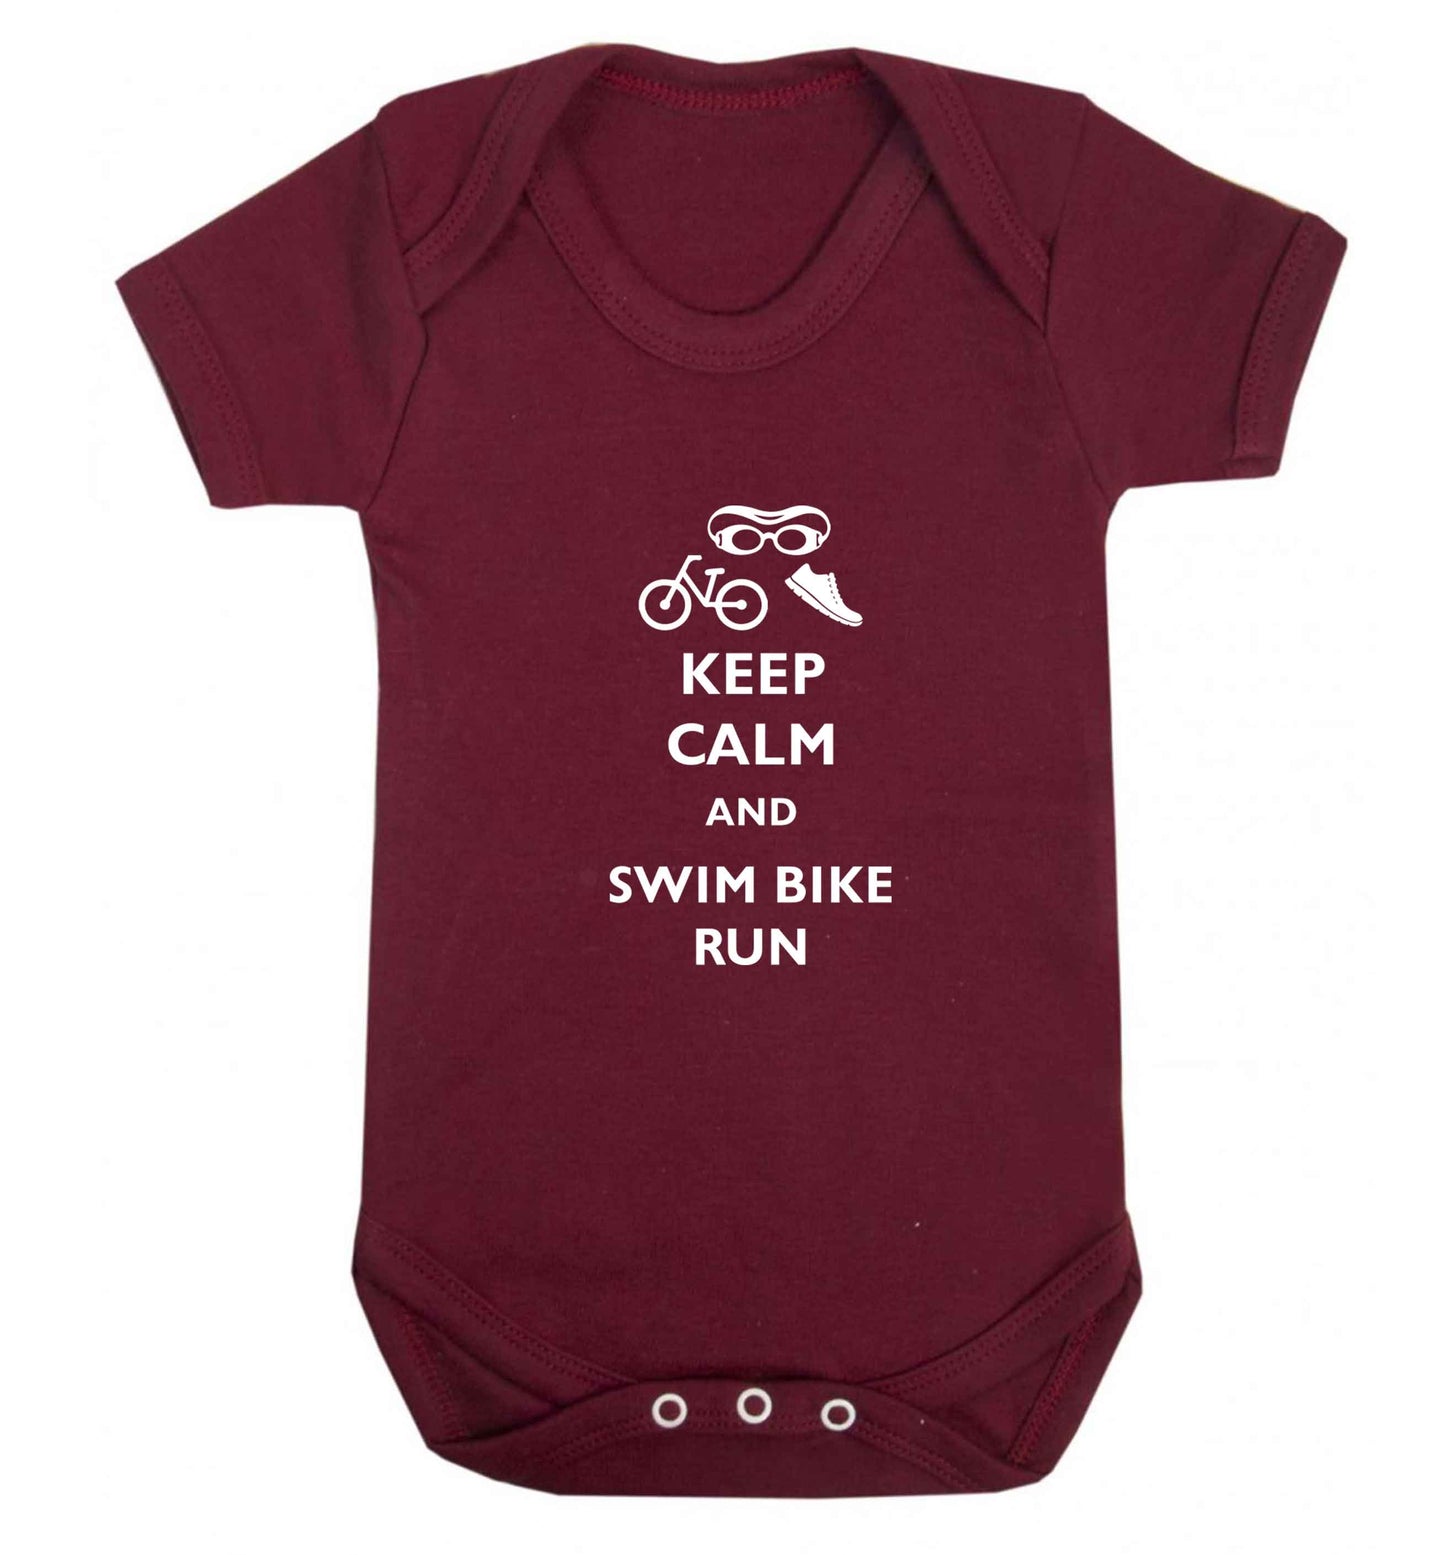 Keep calm and swim bike run baby vest maroon 18-24 months